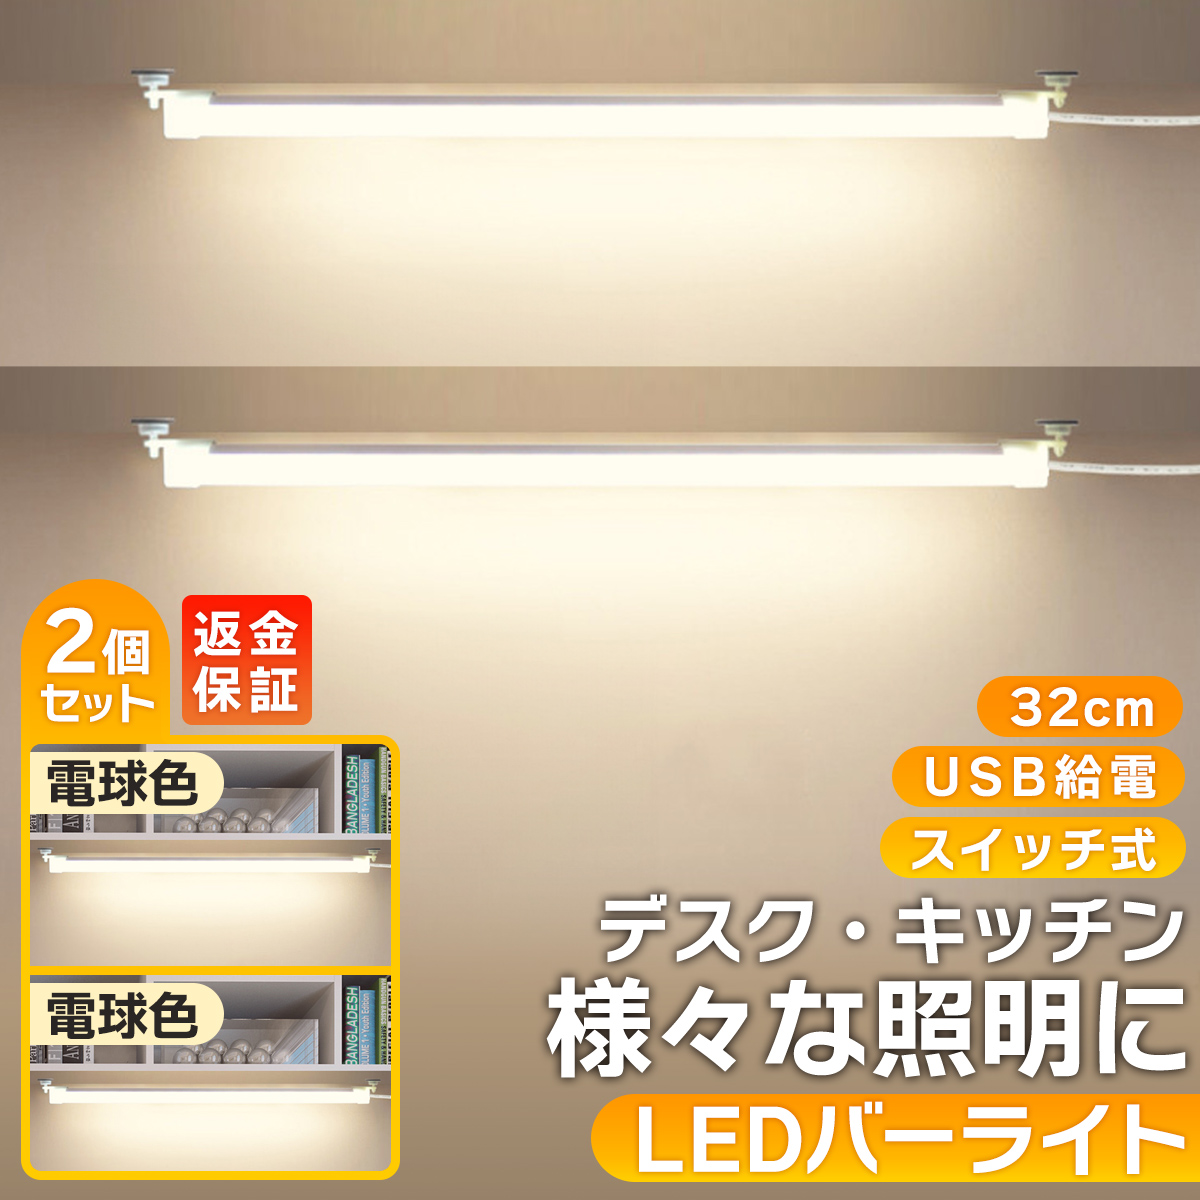 LEDバーライト LED デスクライト 2本セット バーライト 卓上ライト 照明 USB スイッチ付...